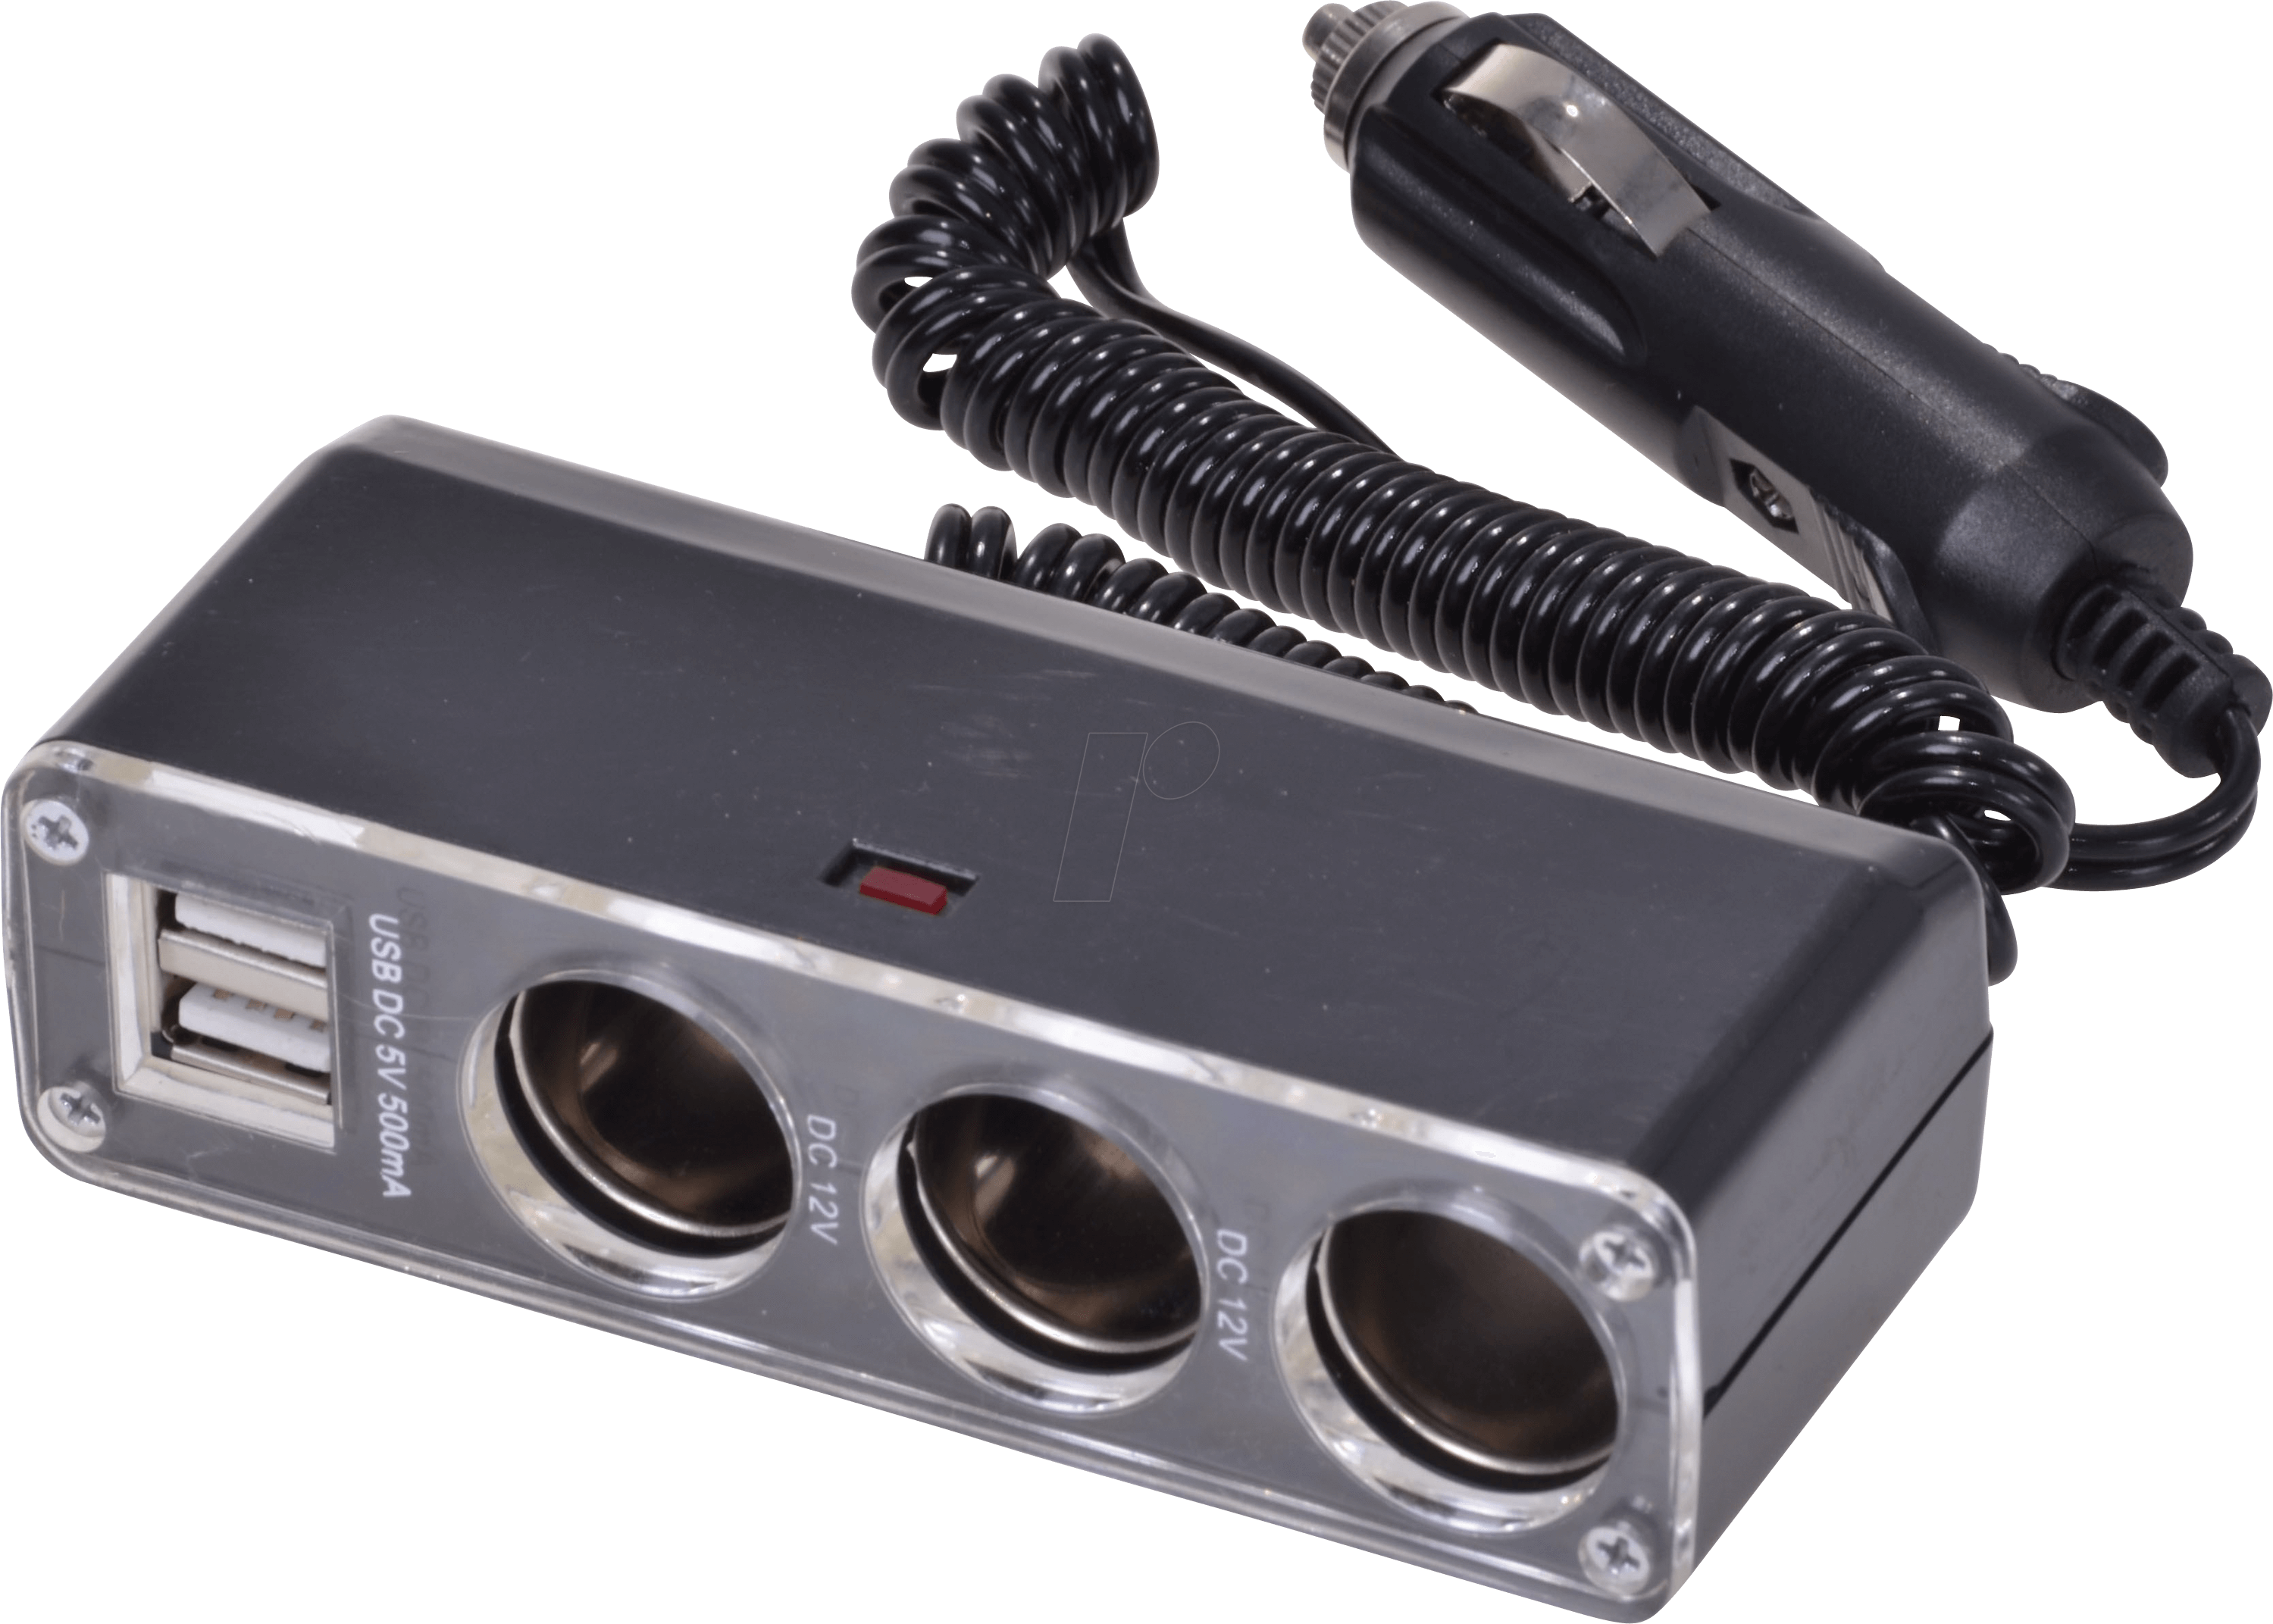 KFZ 36642: Vehicle - 3-way socket set, 2x USB, 12 V at reichelt